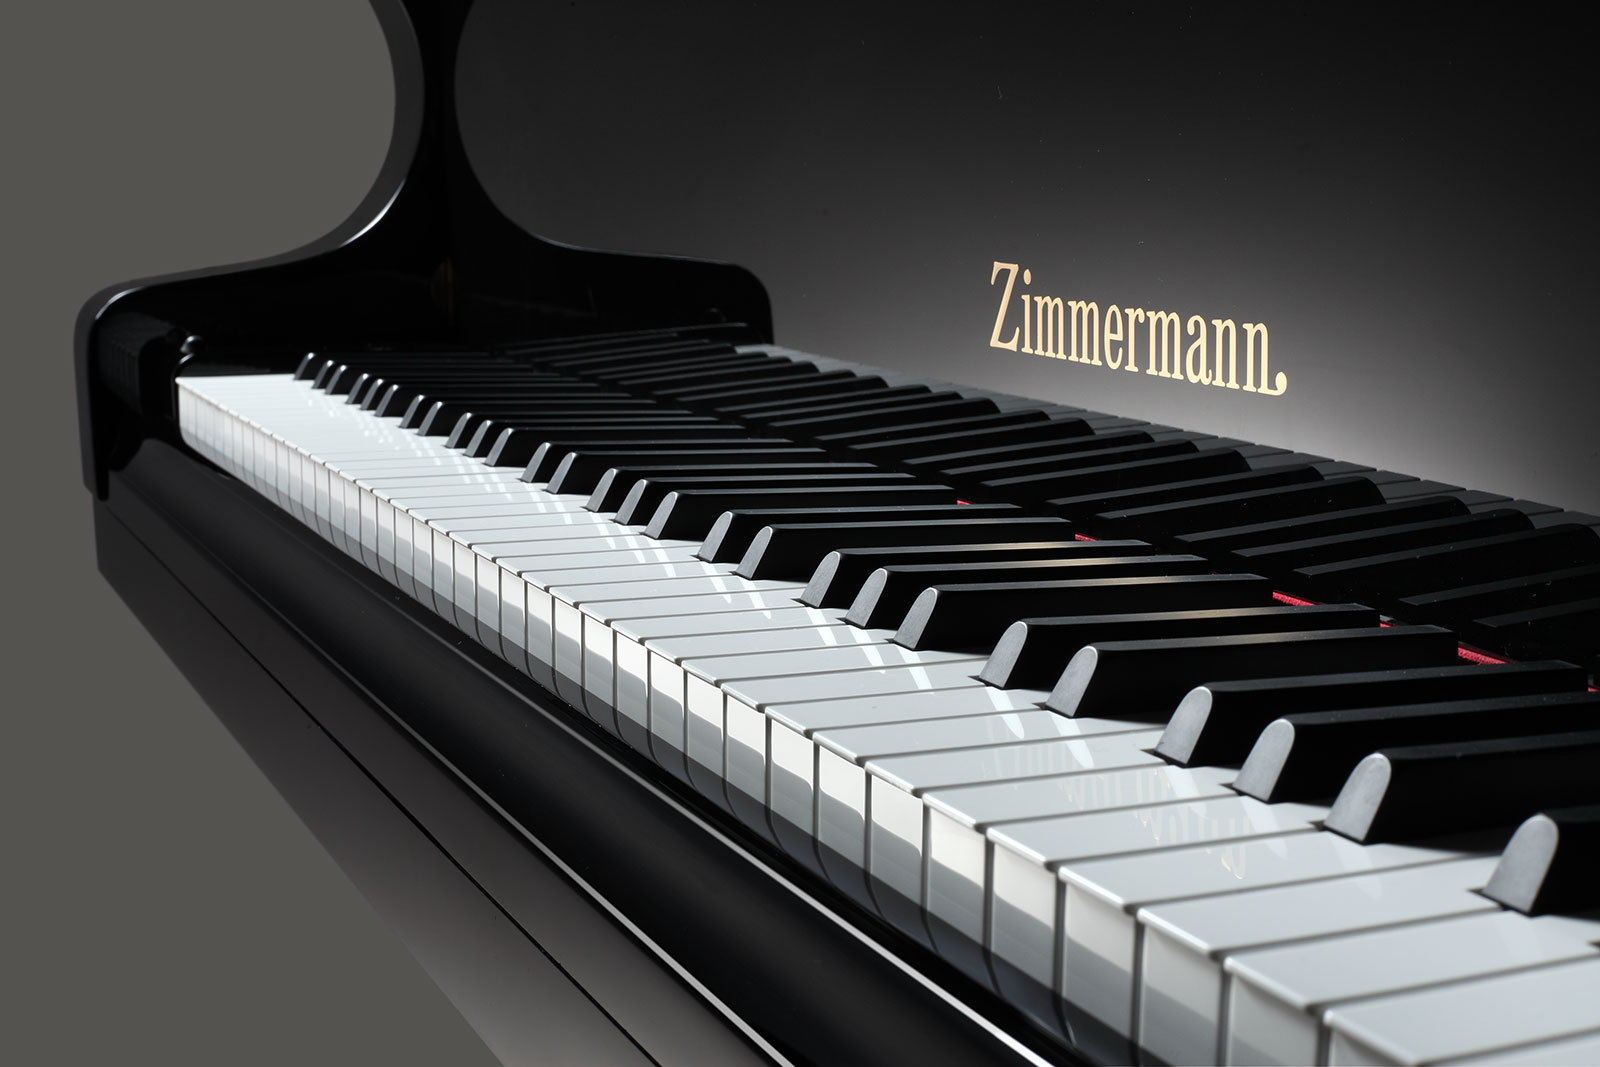 Close-up of Zimmerman piano keys